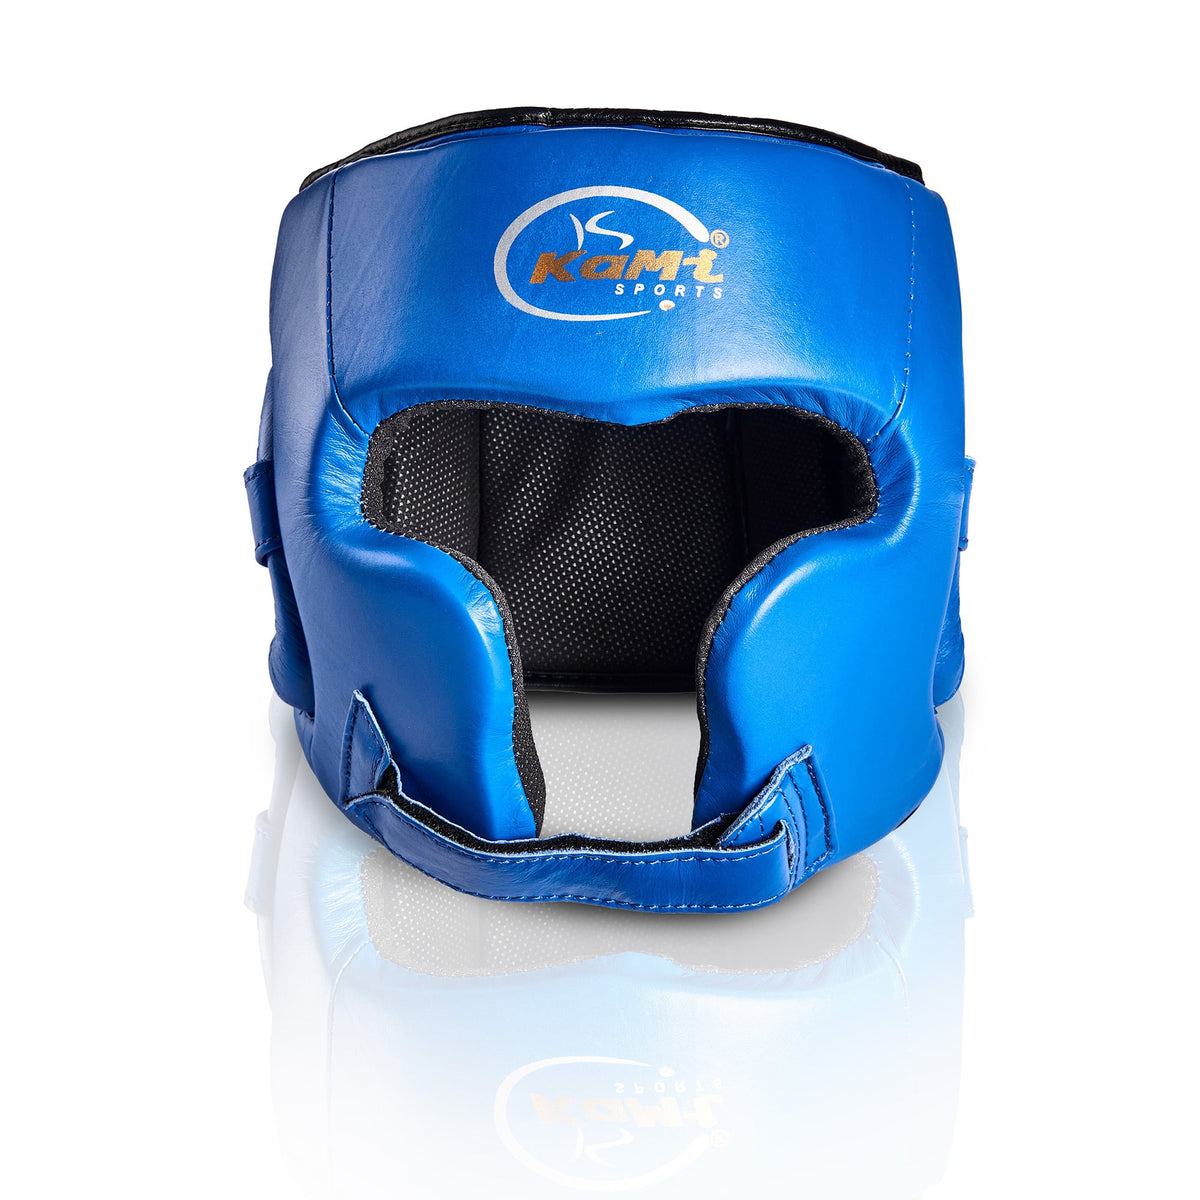 Hochwertiger Rindsleder Kampfsport-Kopfschutz, universell einsetzbar, optimaler Schutz, individuell anpassbar, langlebig.